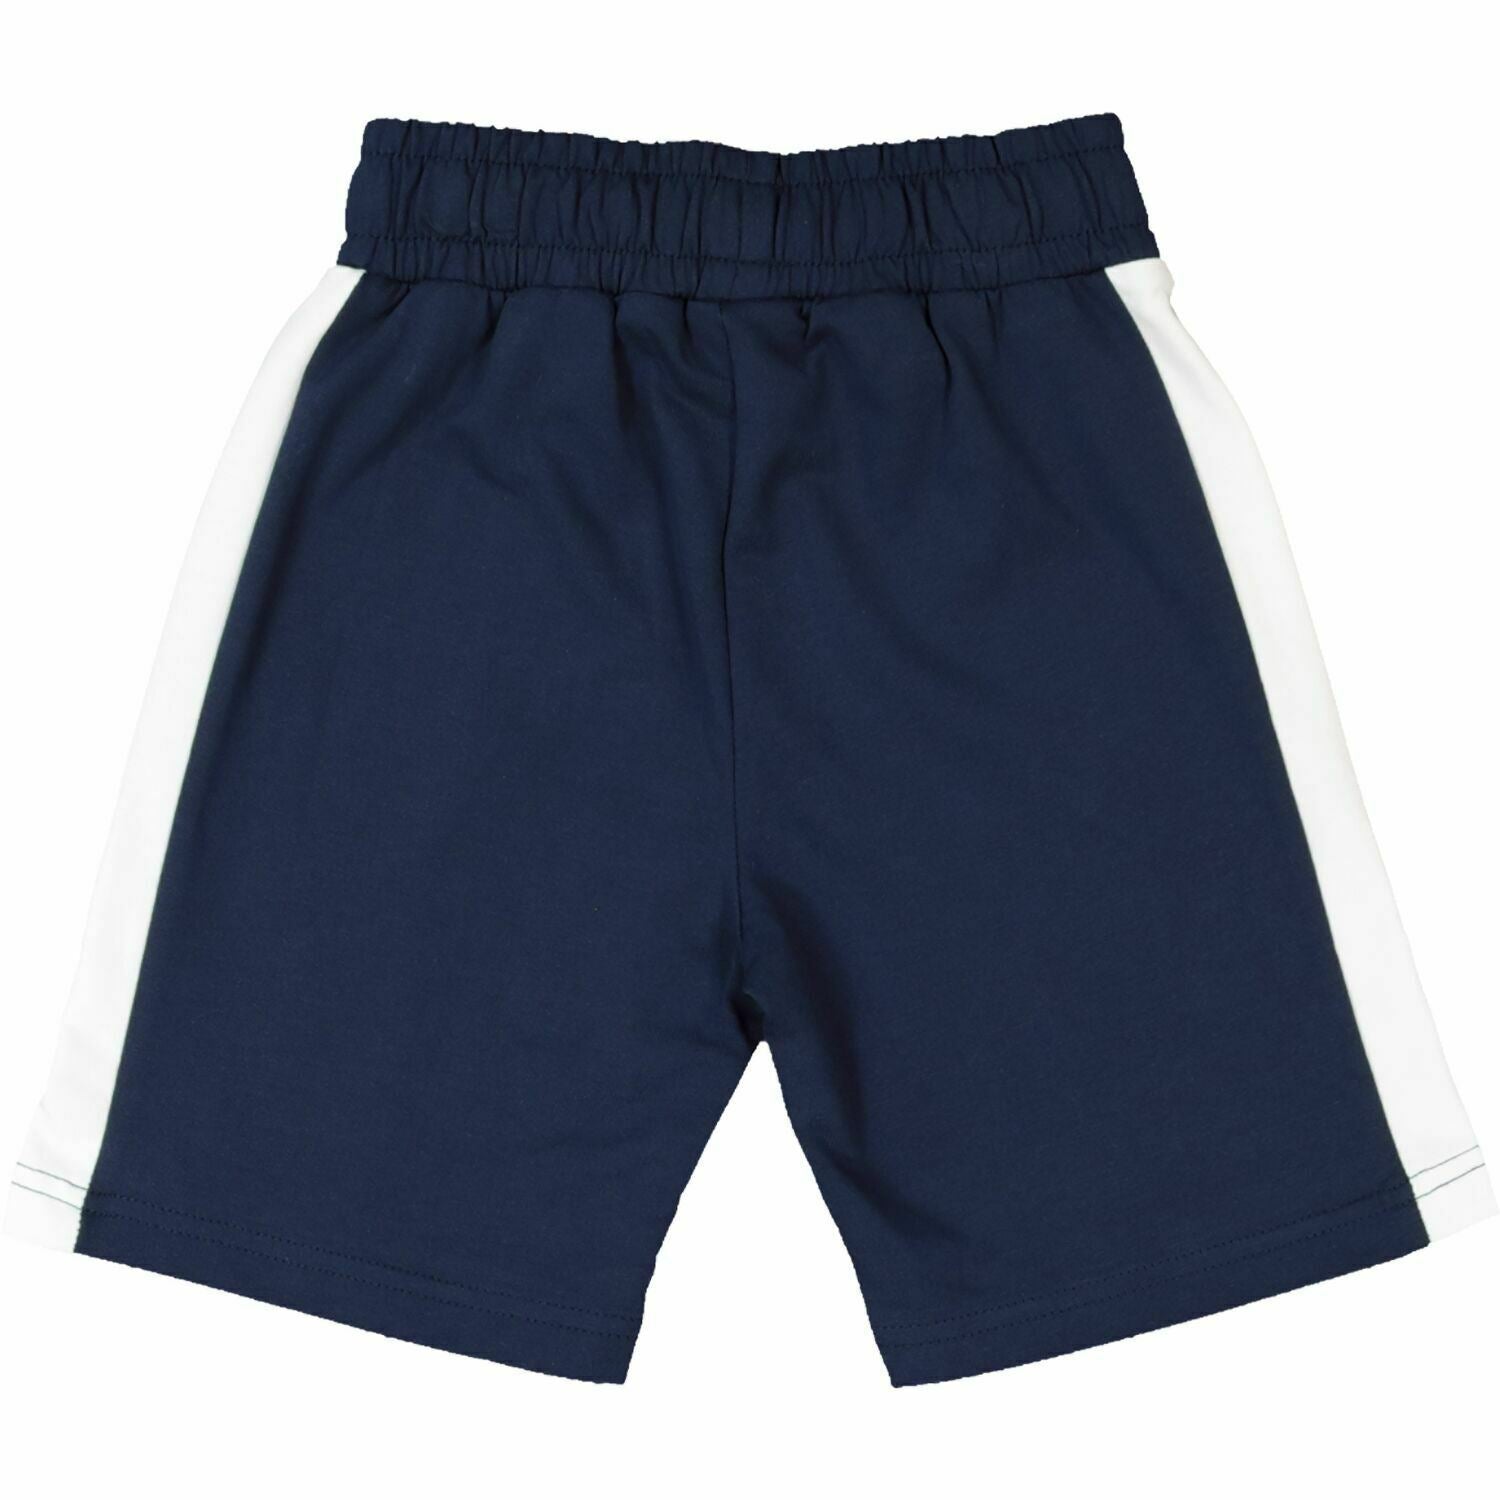 FILA Boys' Kids' Blue & White Side Stripe Cotton Jersey Shorts, 9 y to 10 years